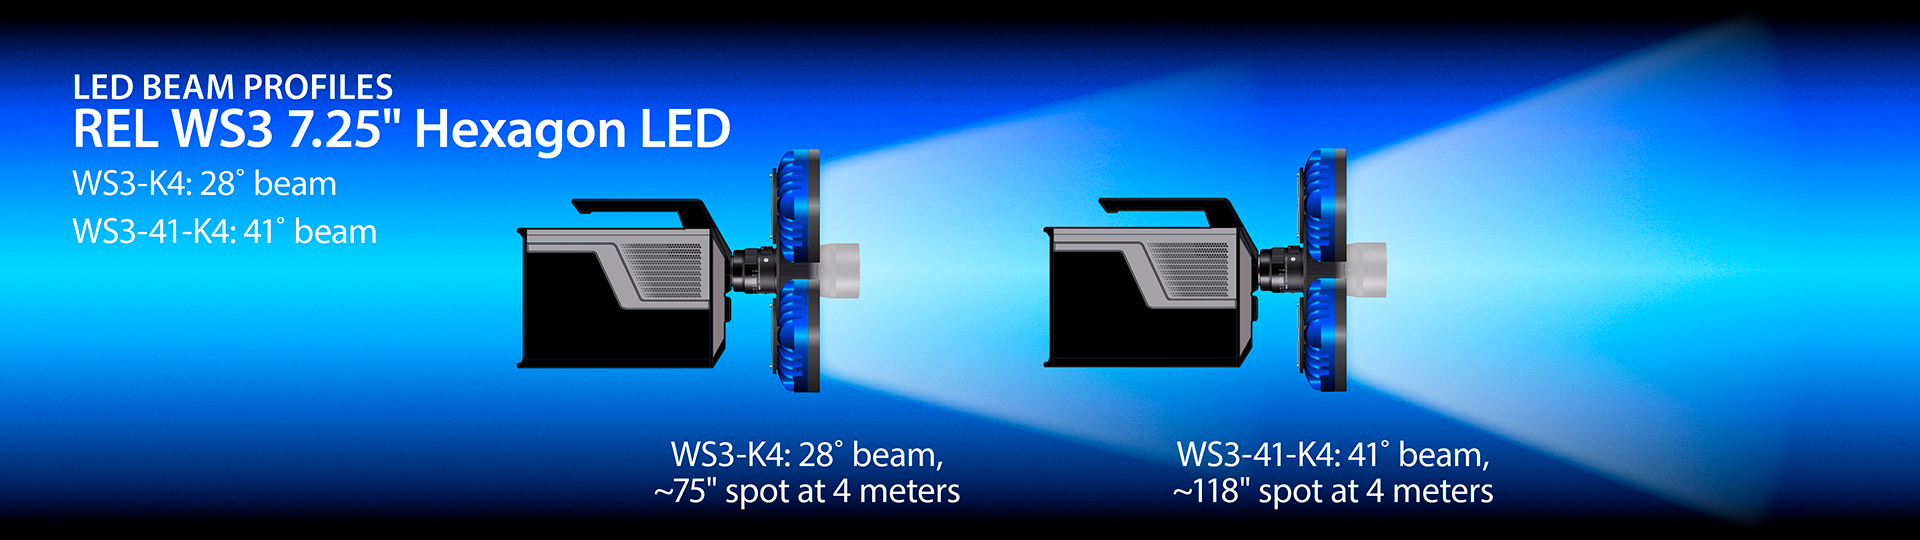 REL WS3-K4 and WS3-41-K4 LED beam profile illustration.